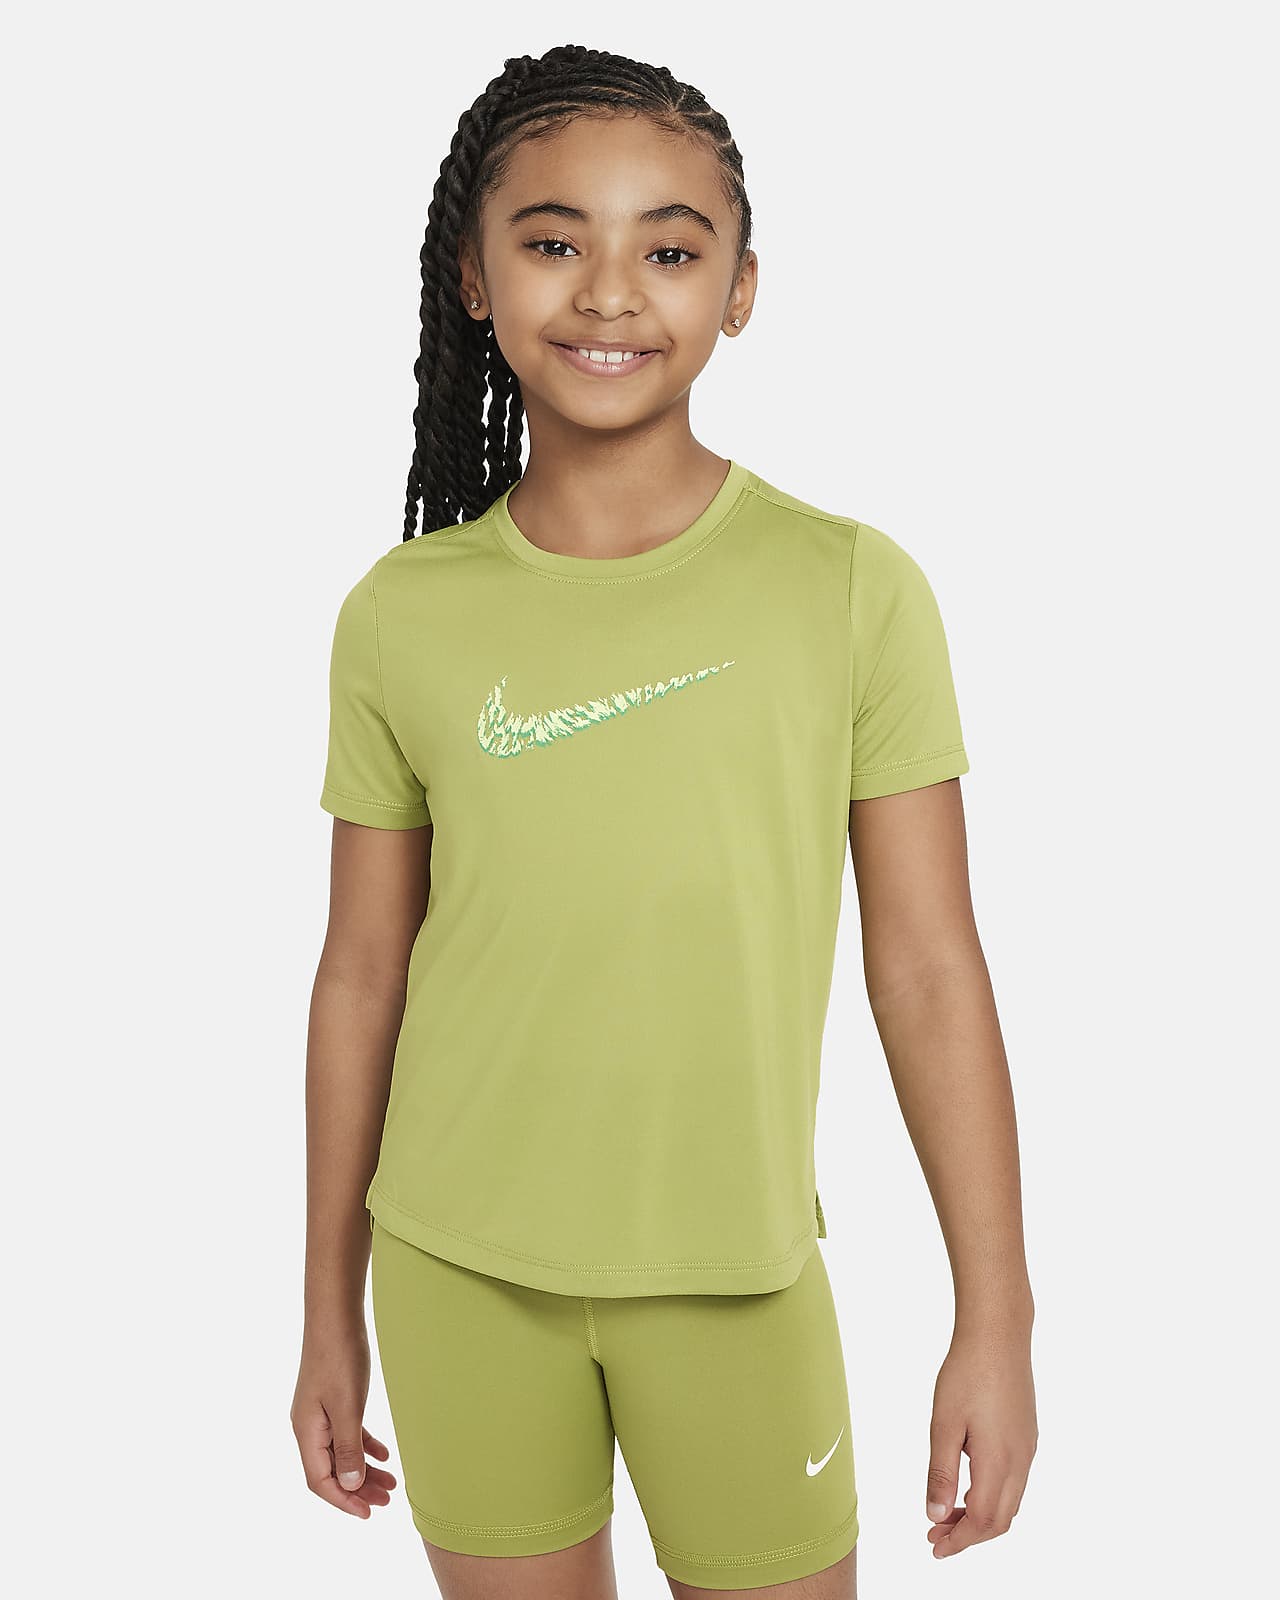 Short-Sleeve Nike Big (Girls\') Top. One Kids\' Training